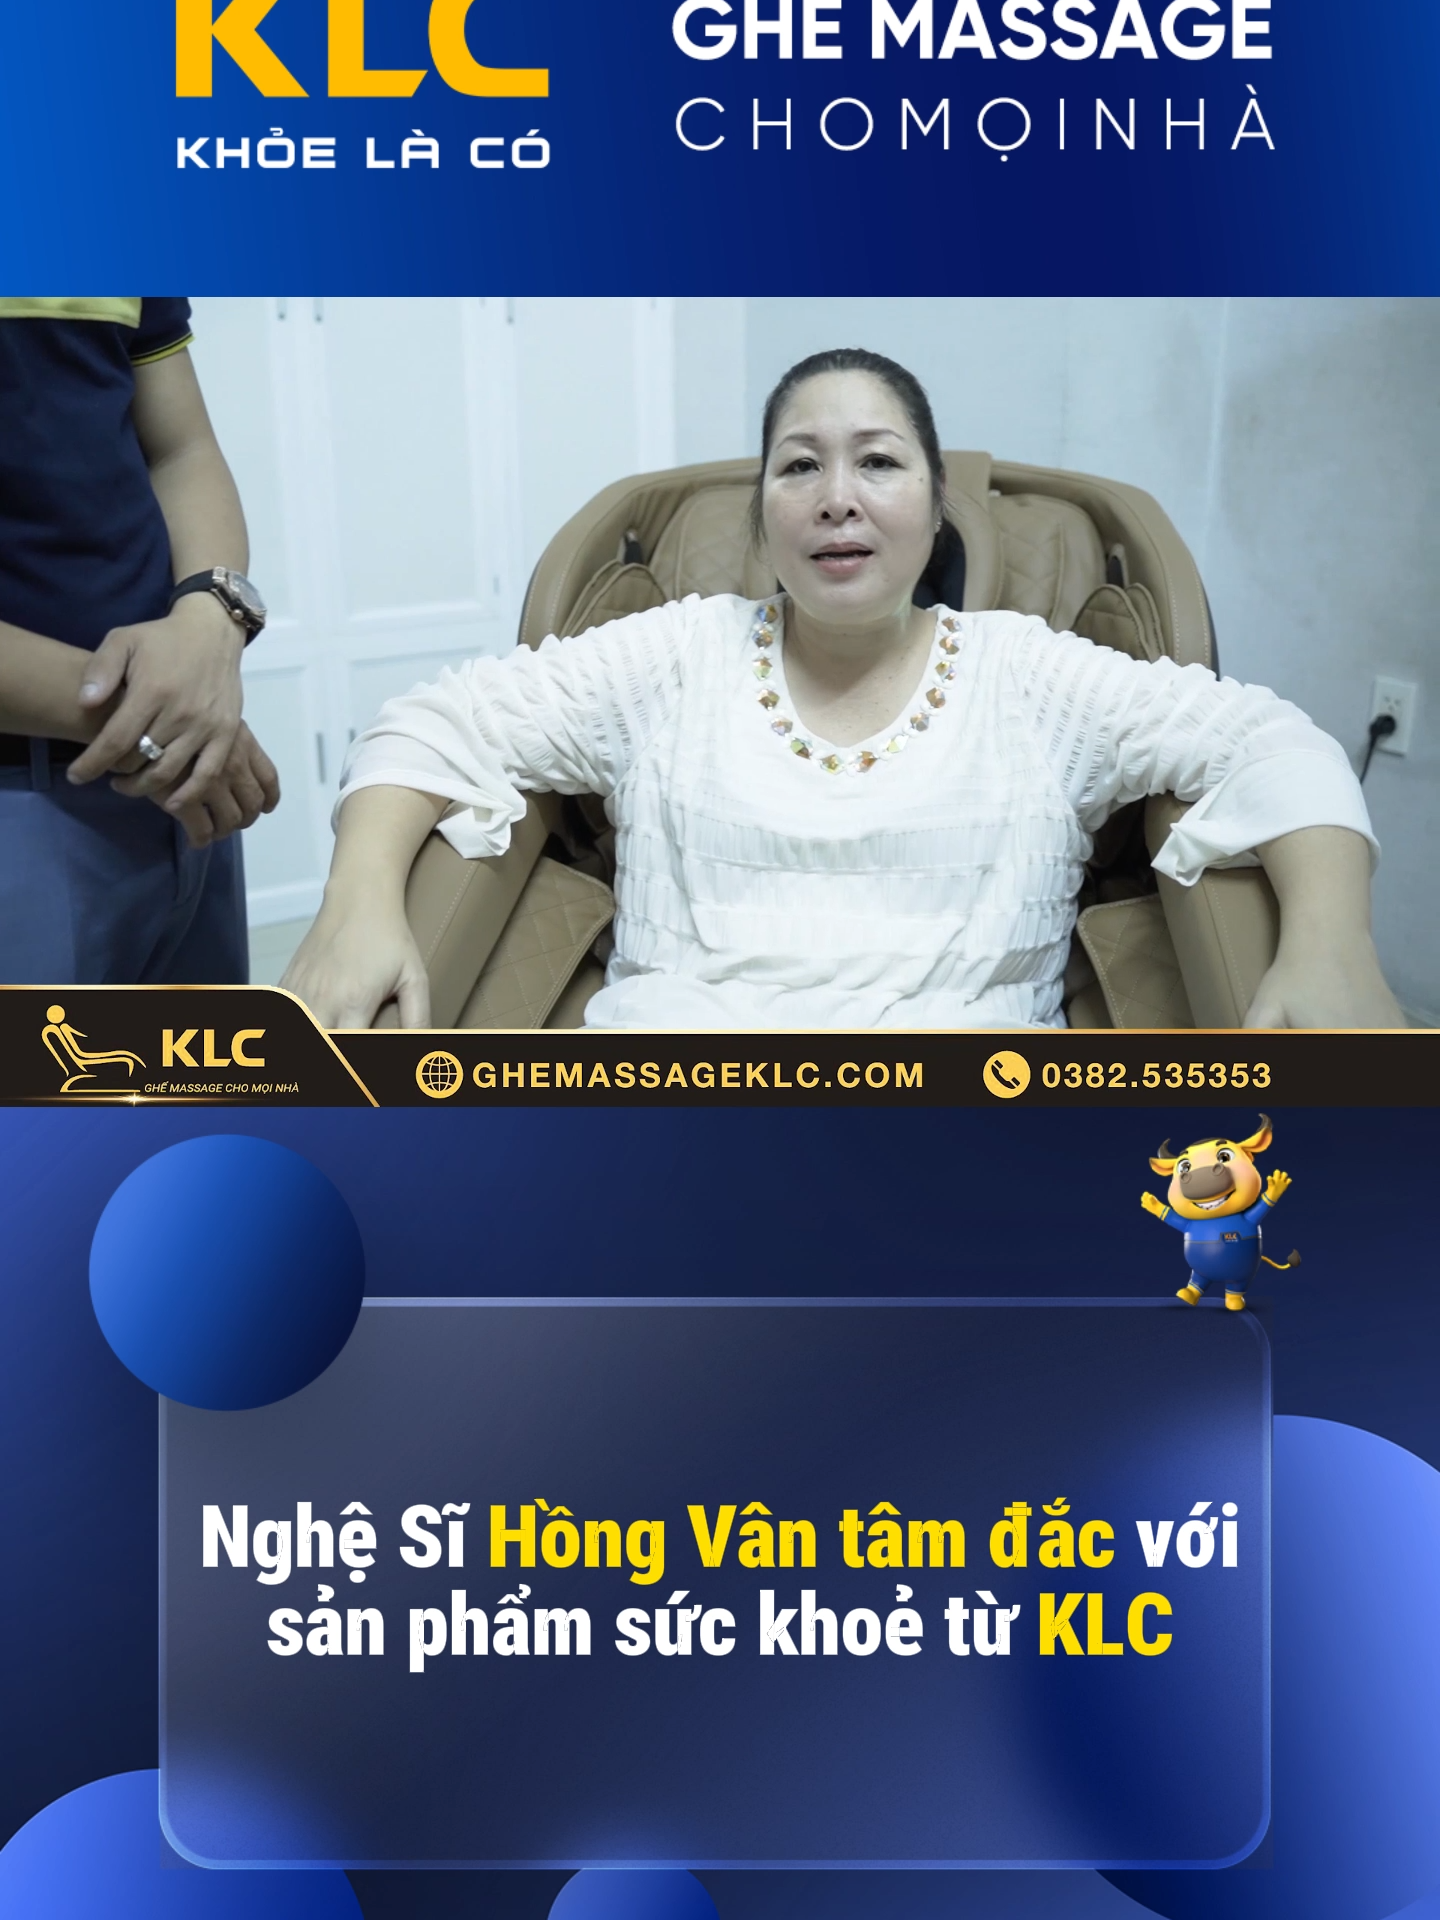 Nghệ sĩ Hồng Vân tâm đắc với sản phẩm sức khoẻ từ KLC #ThanhThoiLuotTet  #ghemassagechinhhangKLC  #GheMassageKLC  #KLC  #Massage  #ghemassage  #KLCGROUP  #2024  #follow  #trend  #HongVan #hongvan #nghesi #nghesihongvan